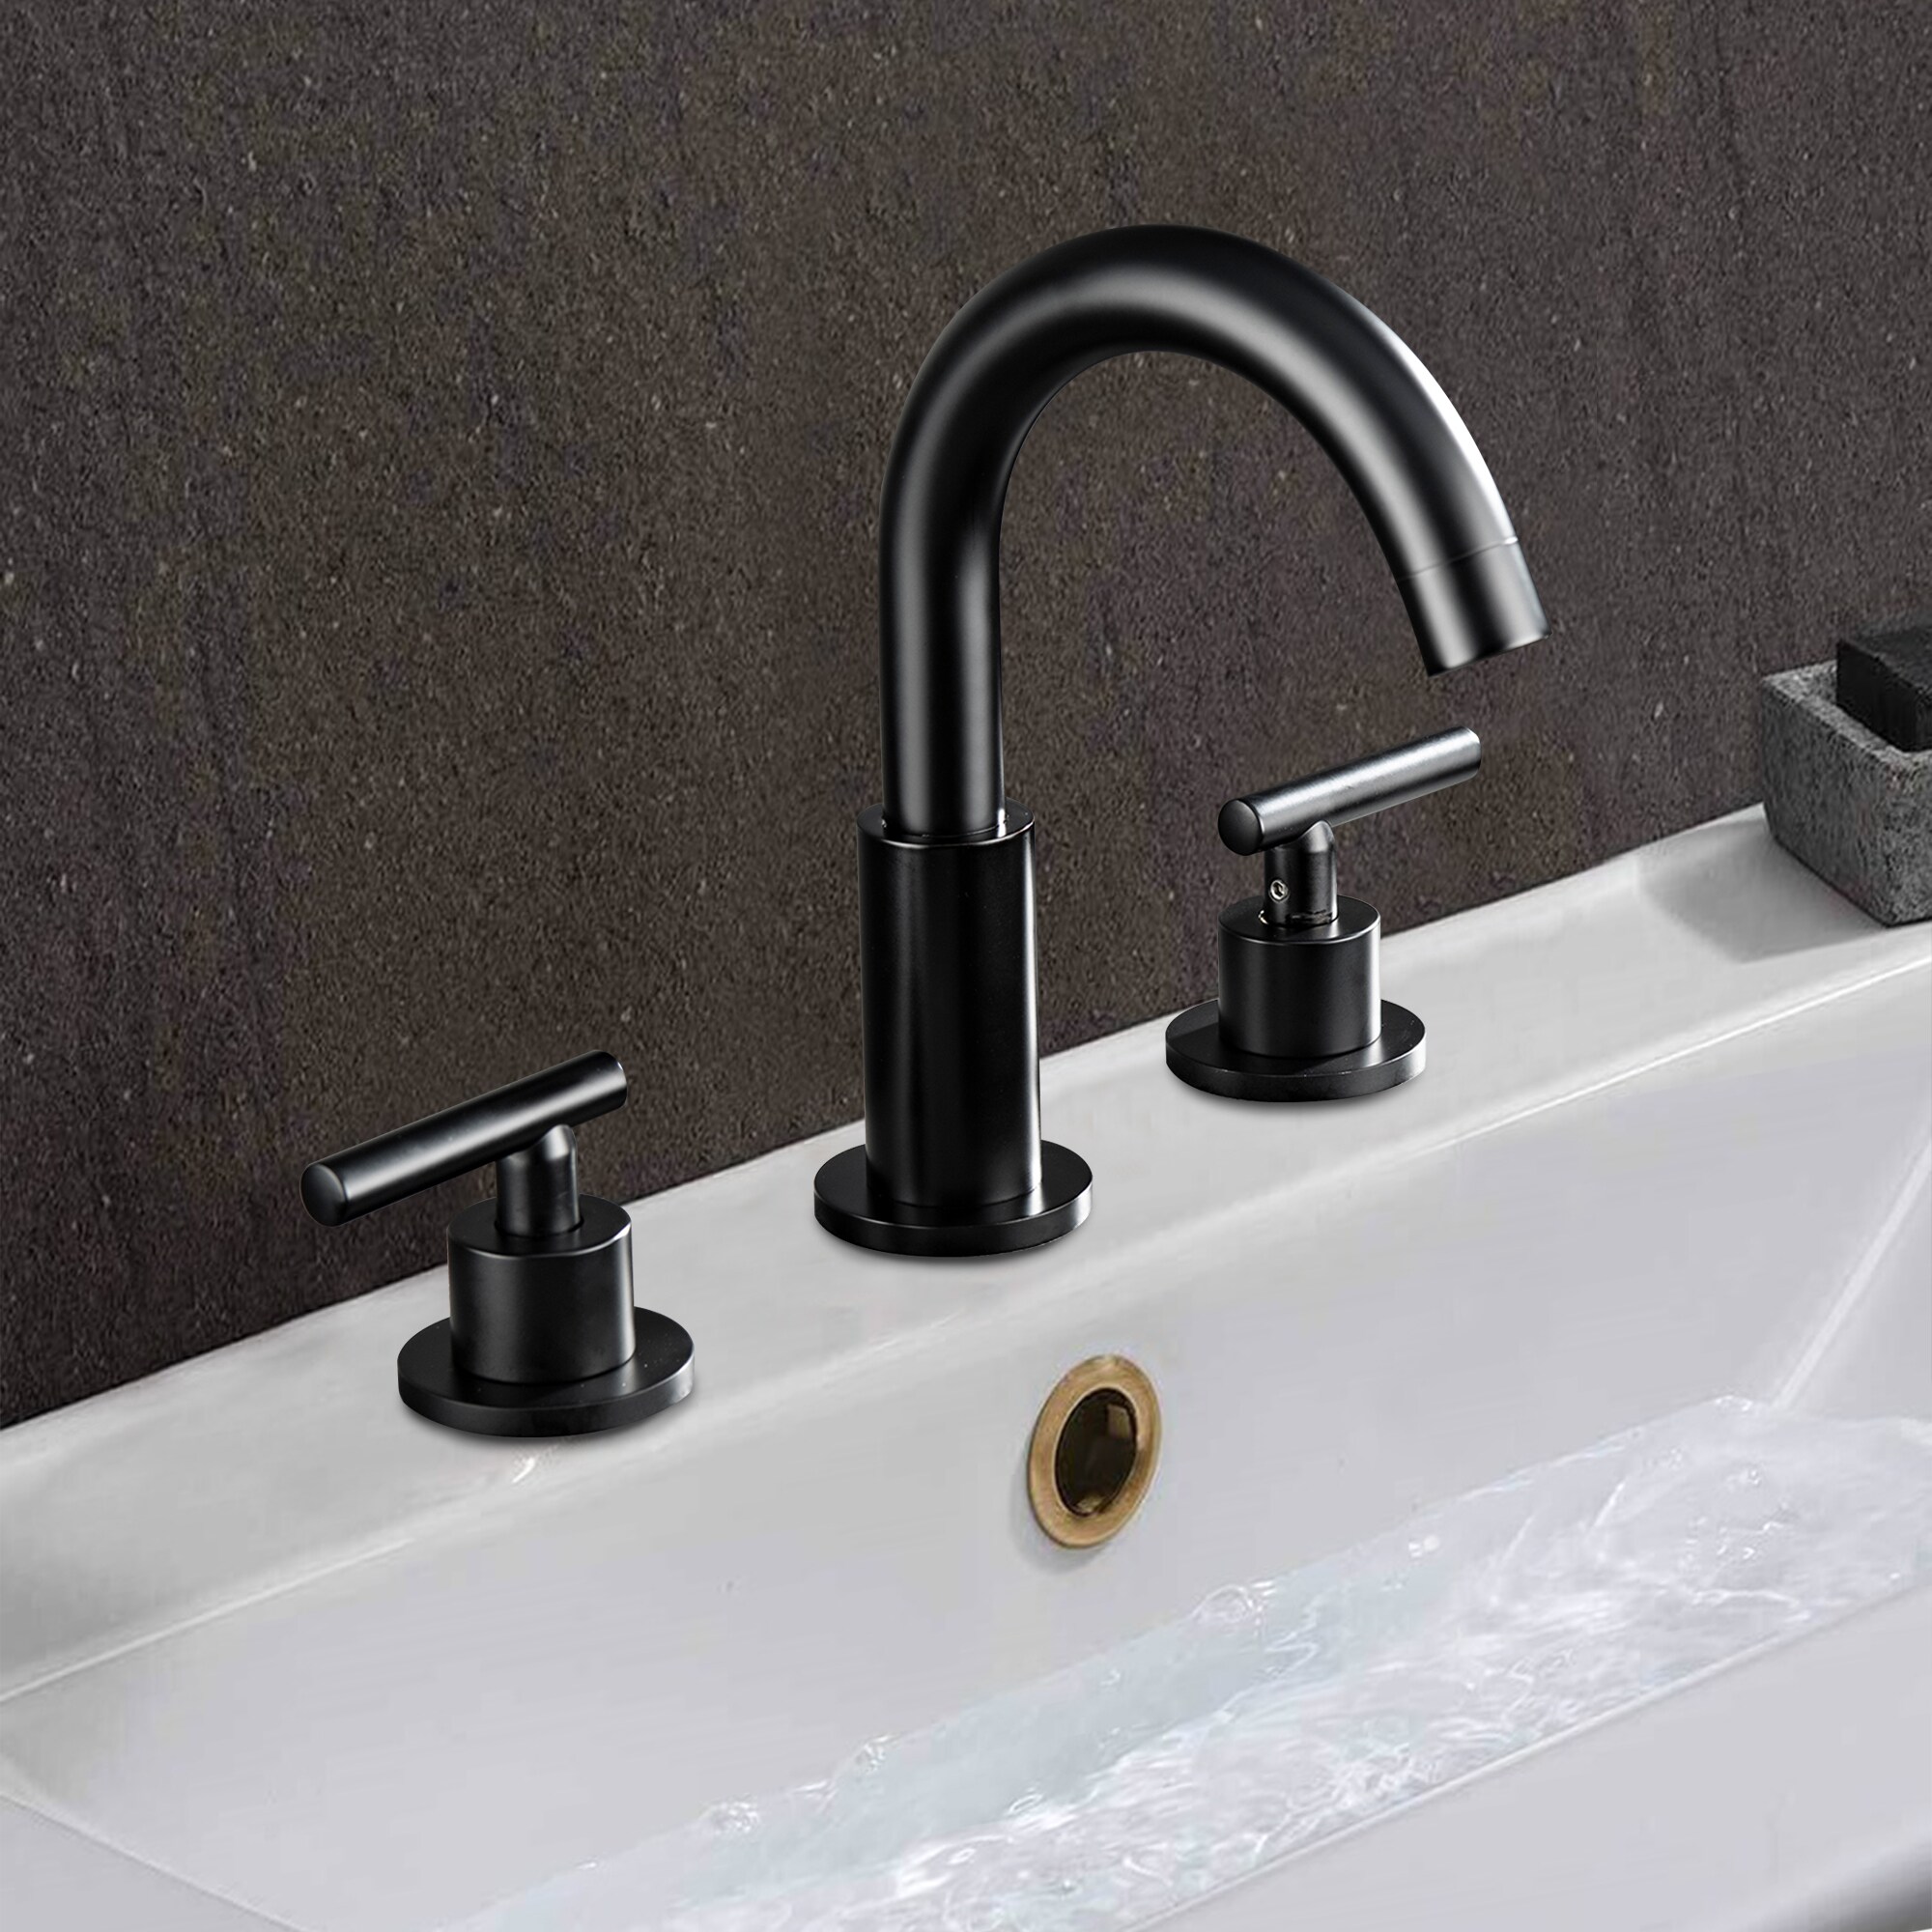 WELLFOR Widespread bath faucet Matte Black Widespread 2-Handle Swivel ...